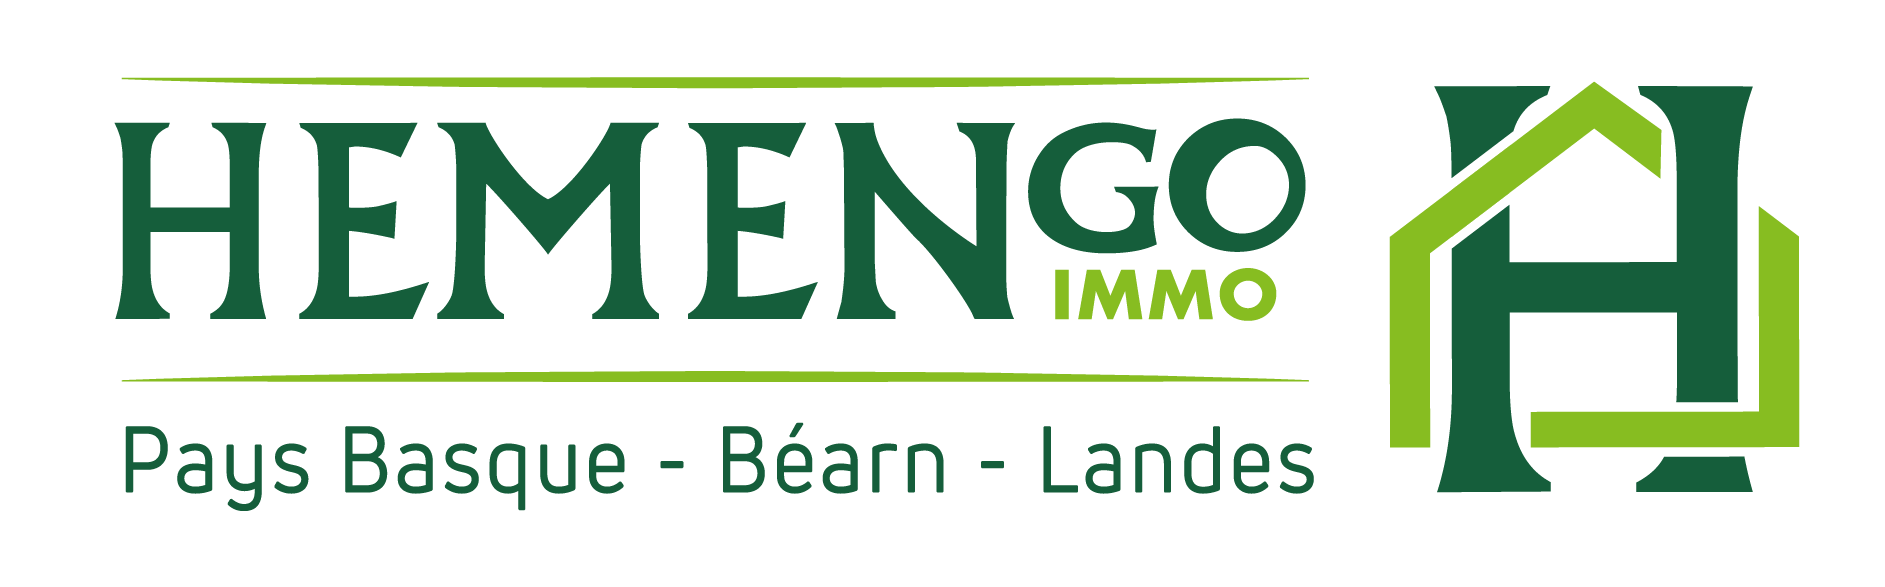 Logo Hemengo Immo